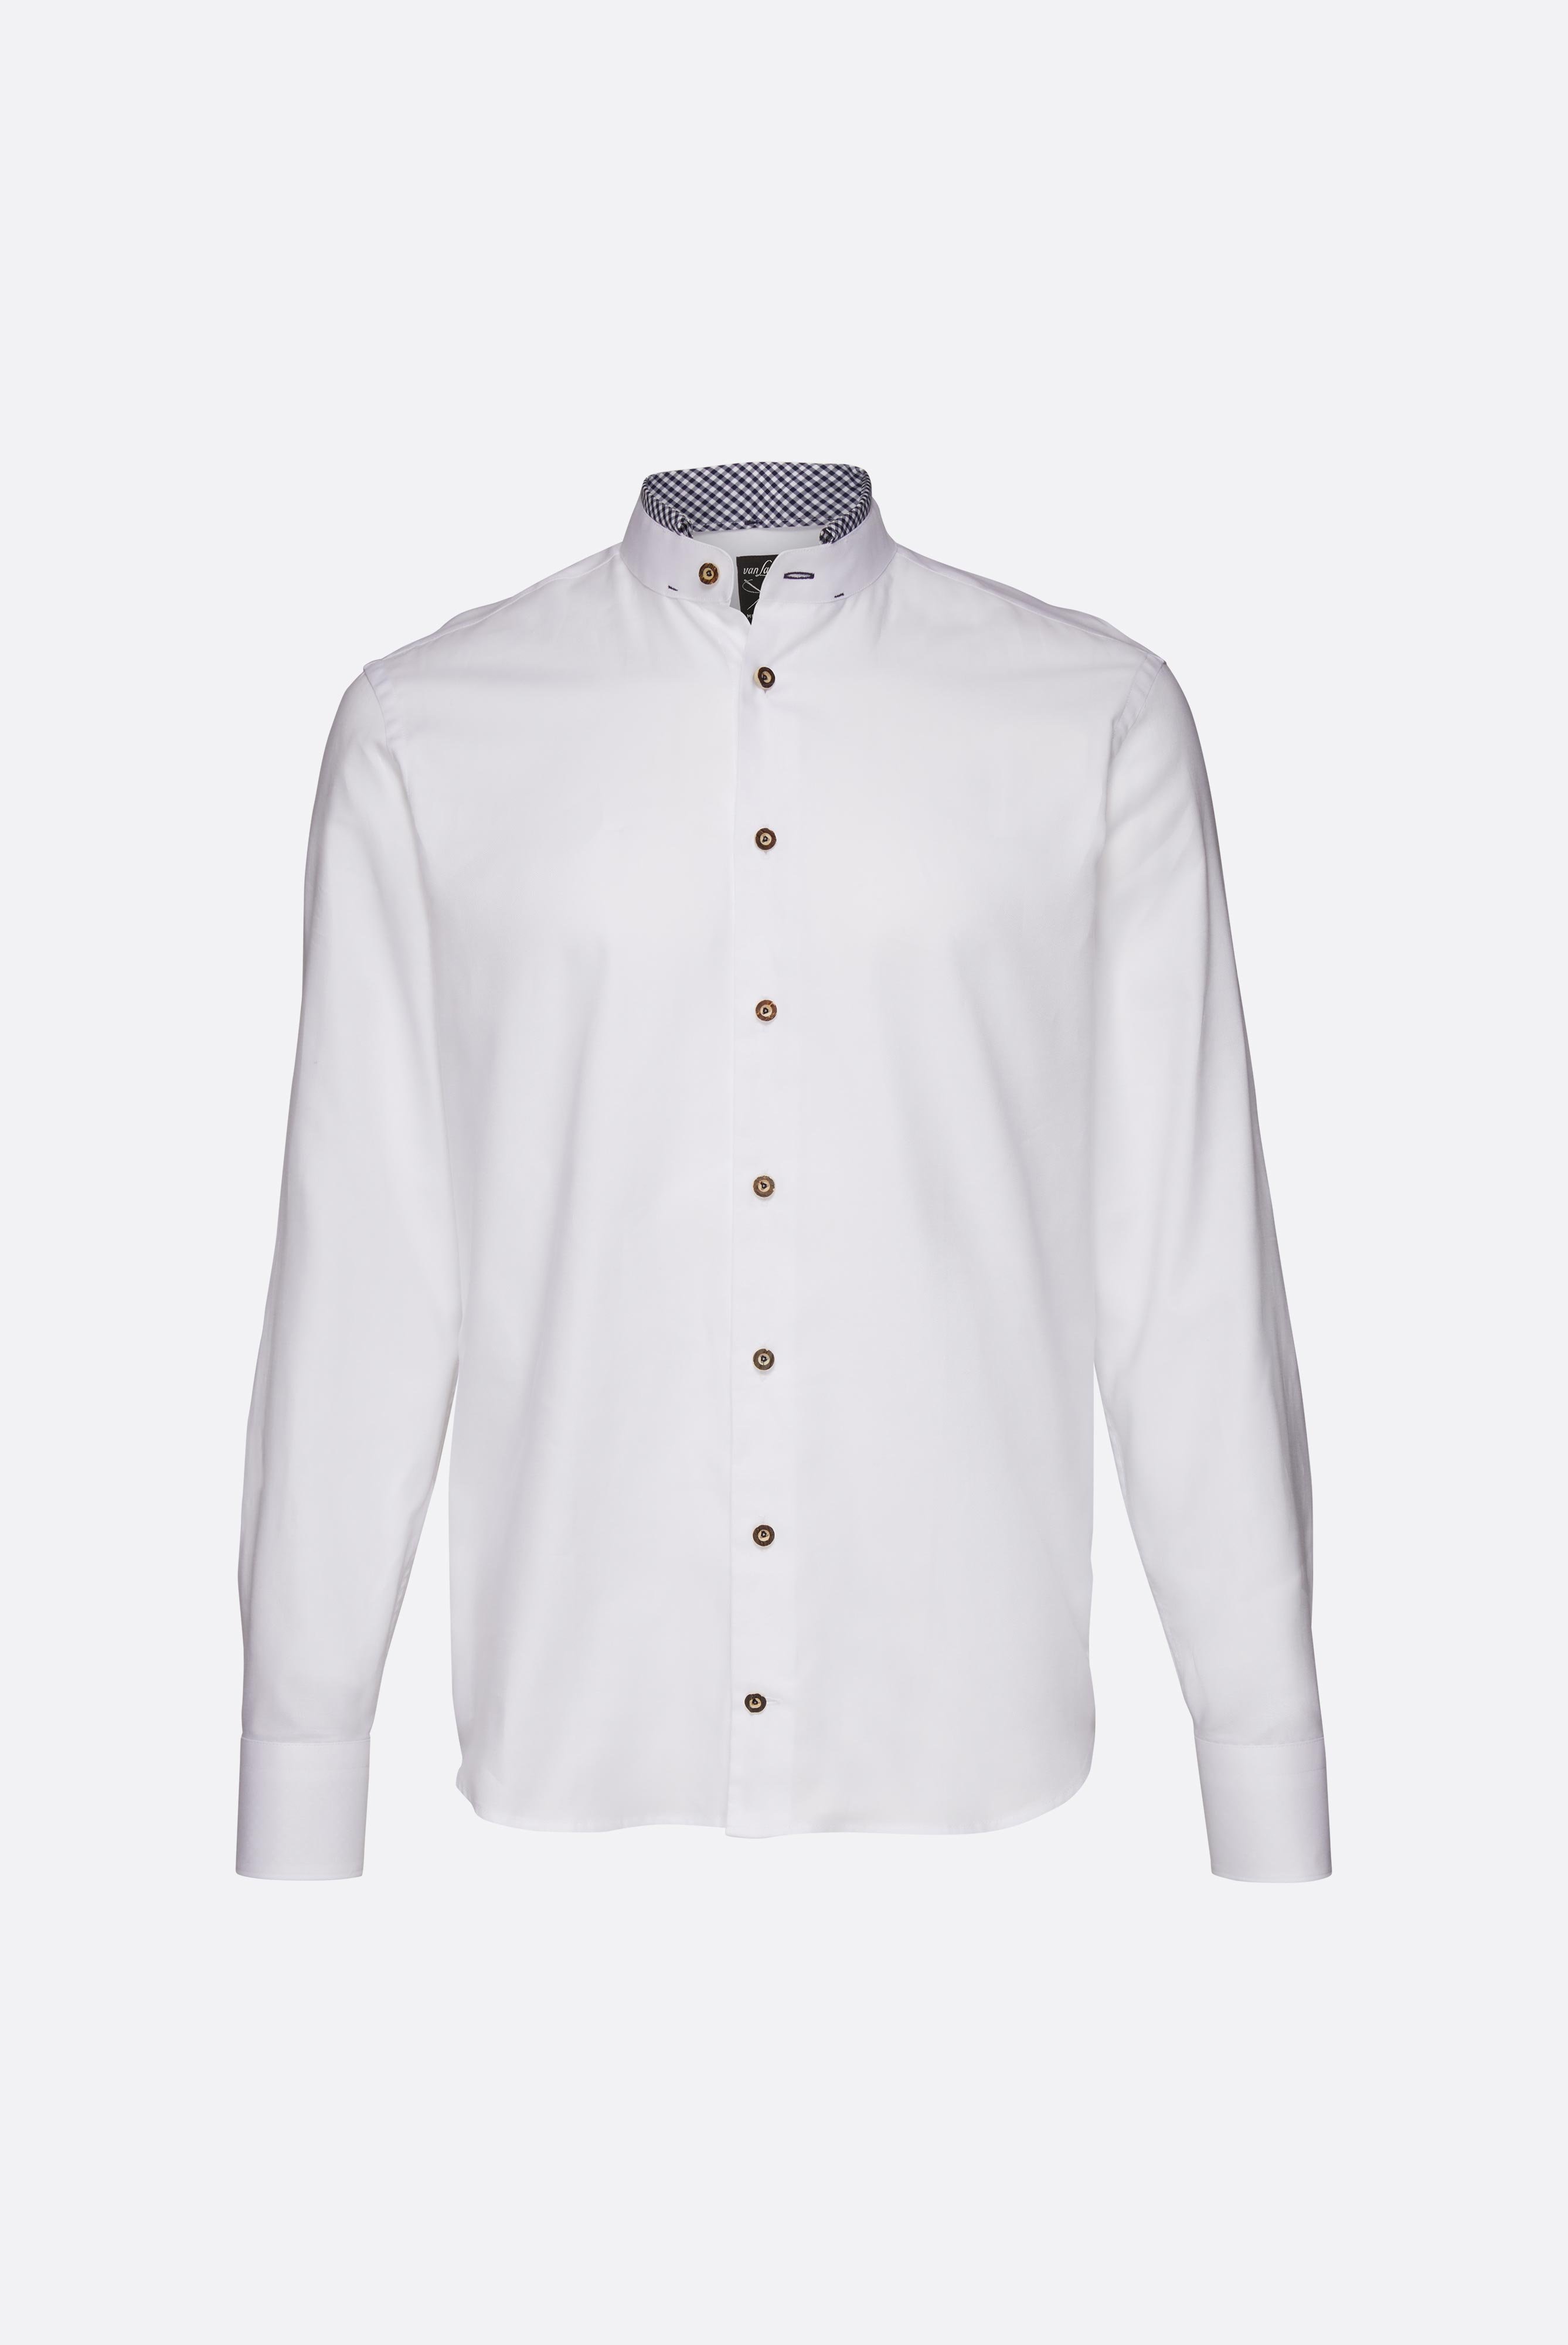 Festliche Hemden+Oxford Traditional Shirt with coloured detail+20.2081.8Q.150251.007.38